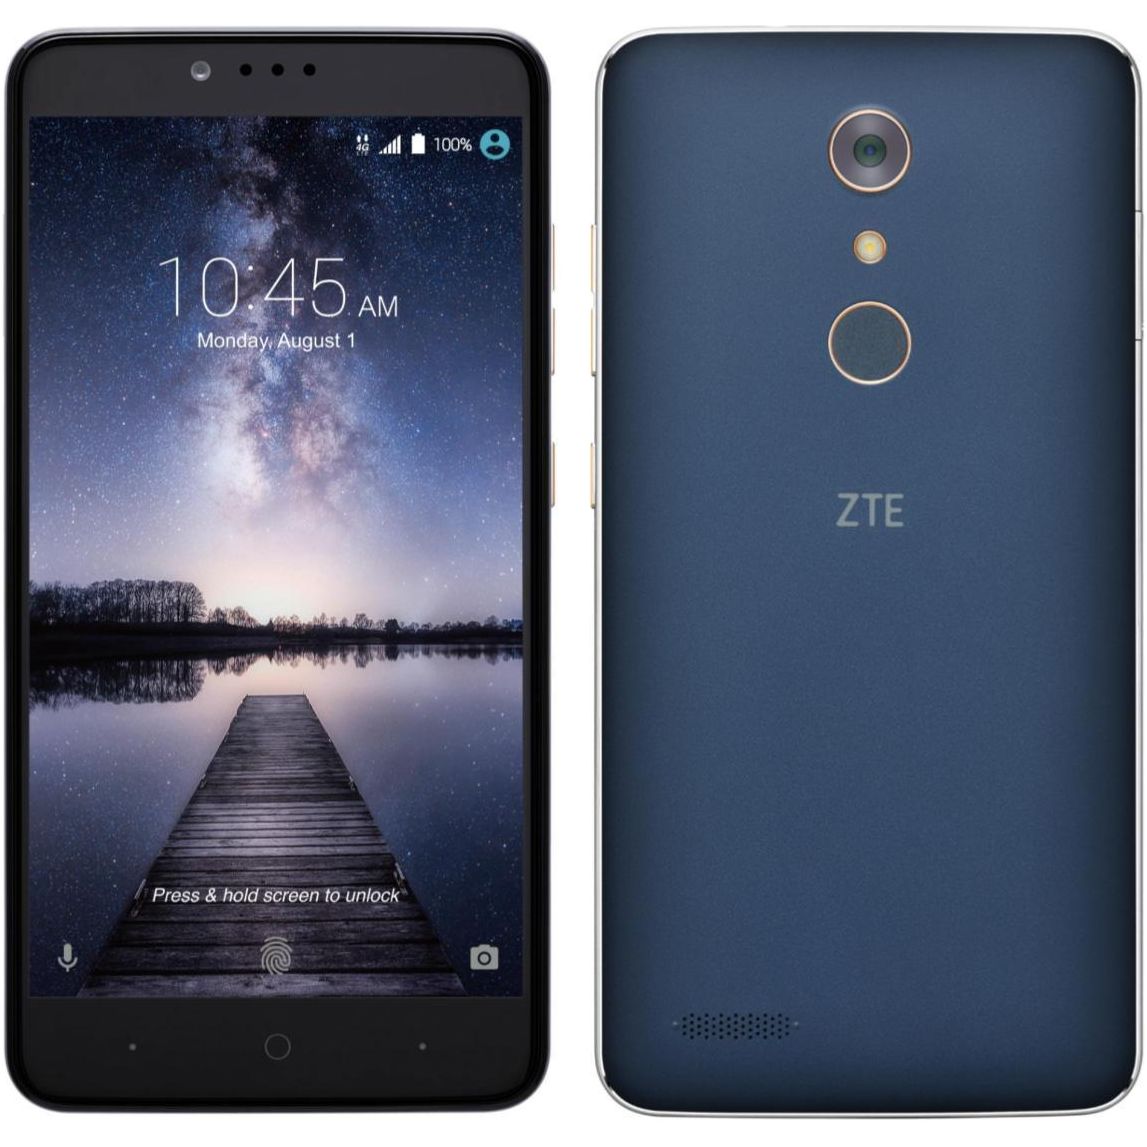 ZTE Zmax Pro Z981 - 32GB - Black (T-Mobile) Smartphone